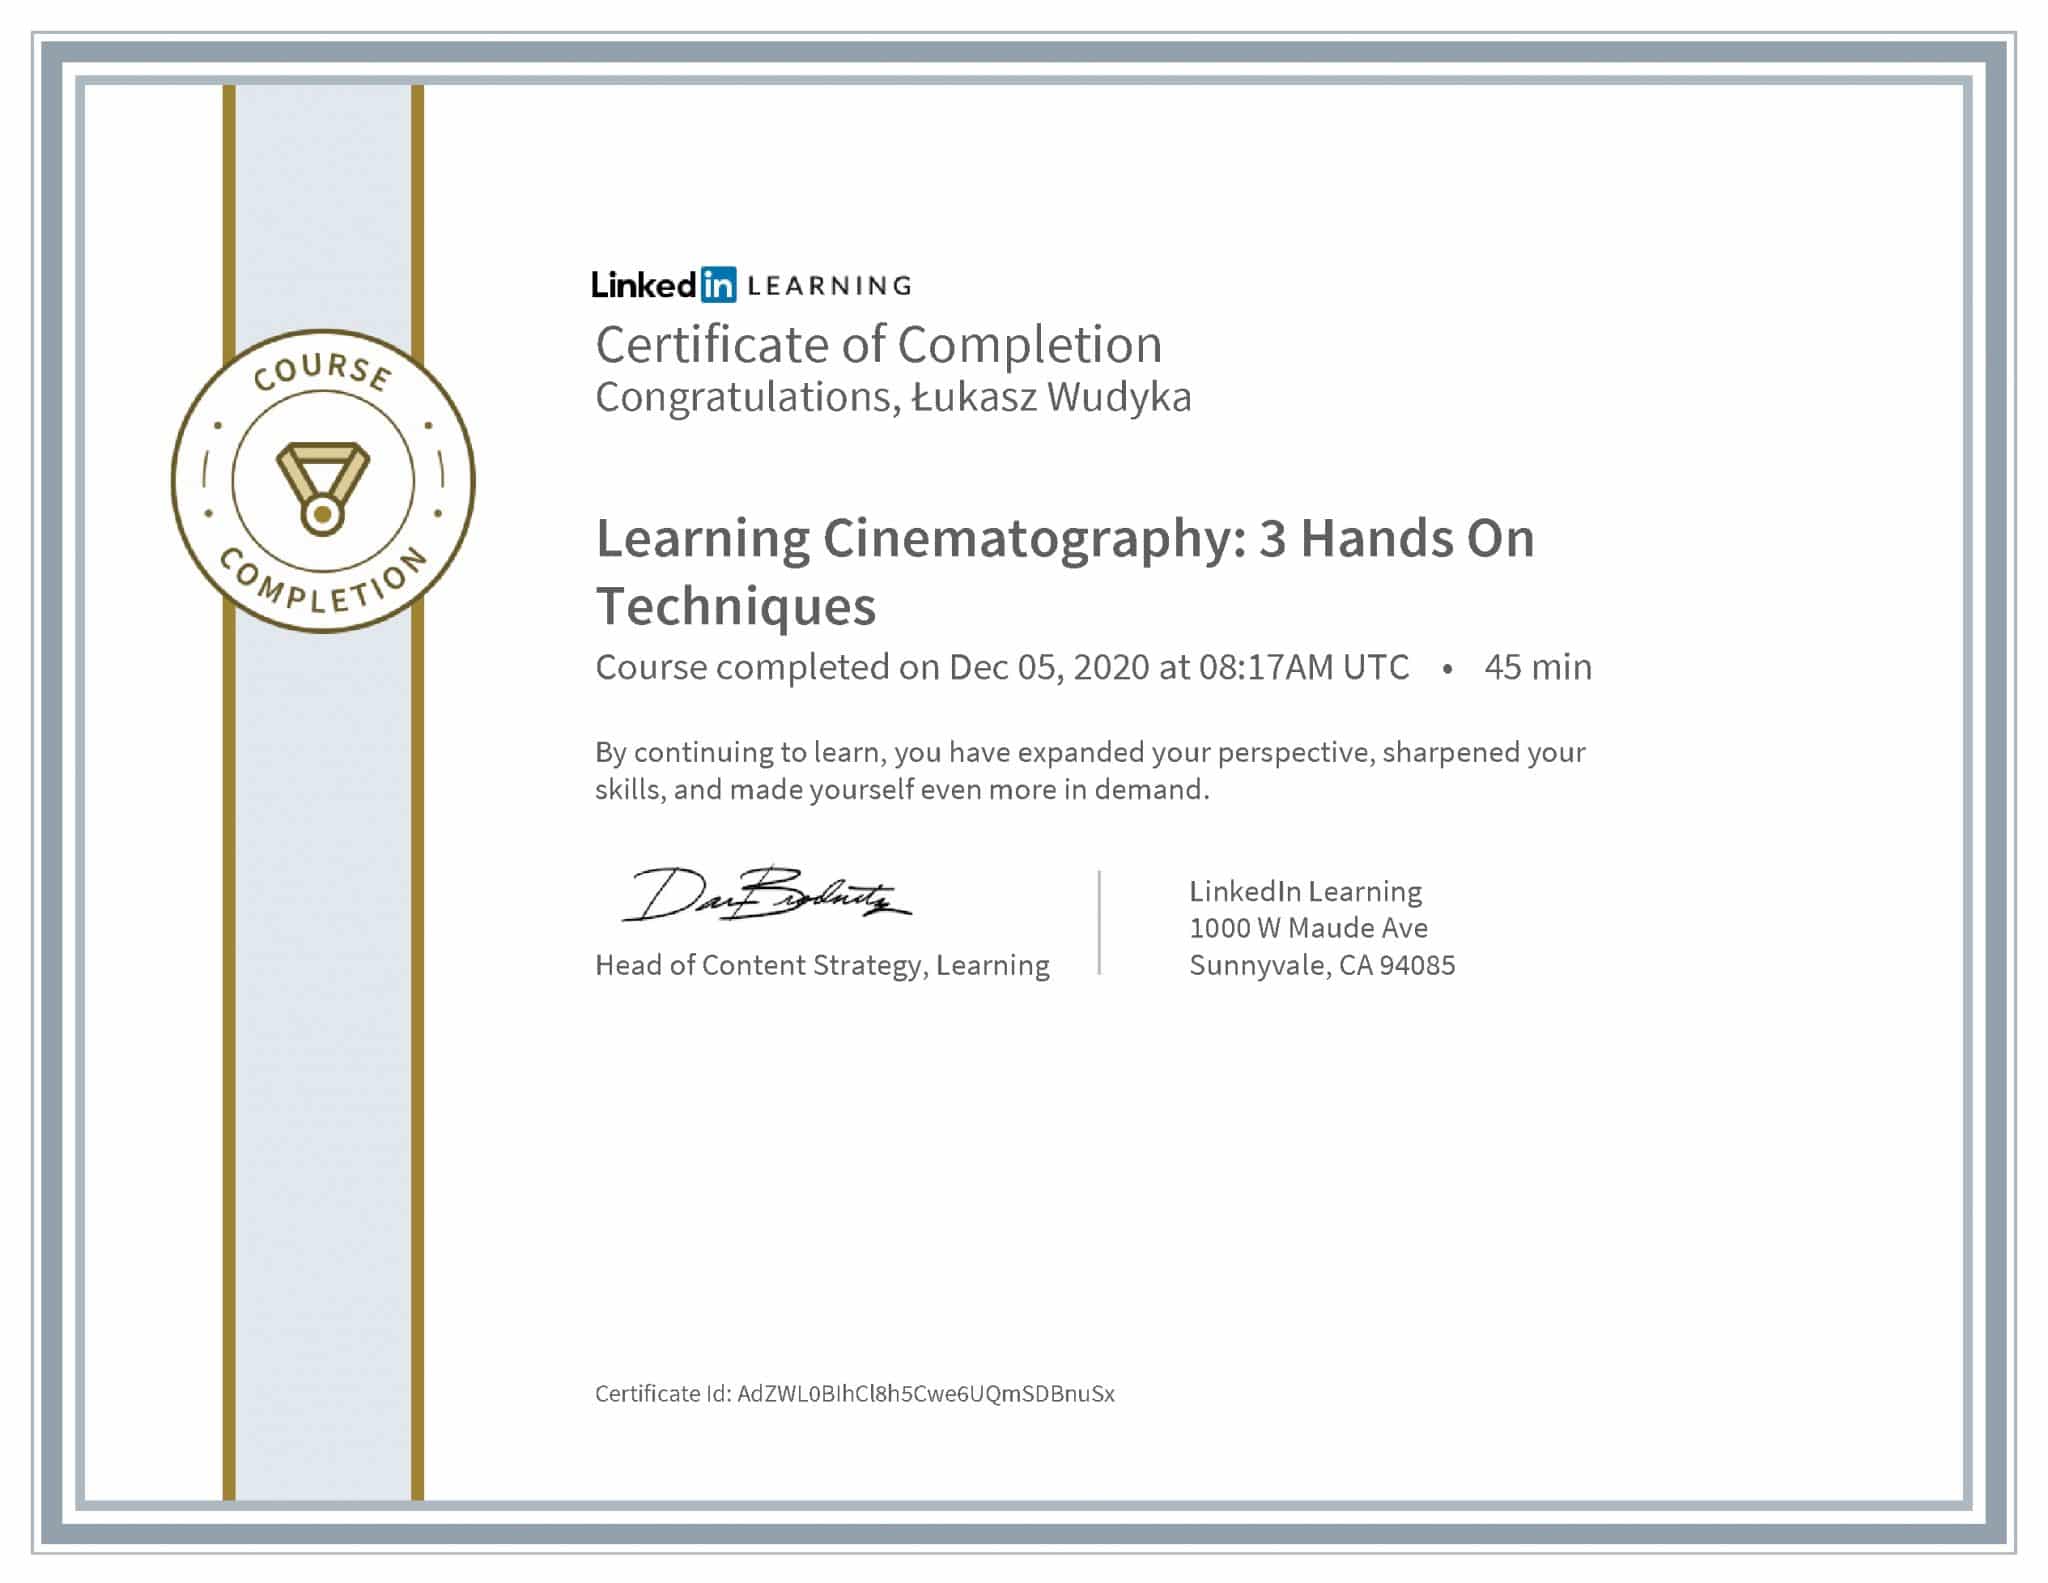 Łukasz Wudyka certyfikat LinkedIn Learning Cinematography: 3 Hands On Techniques